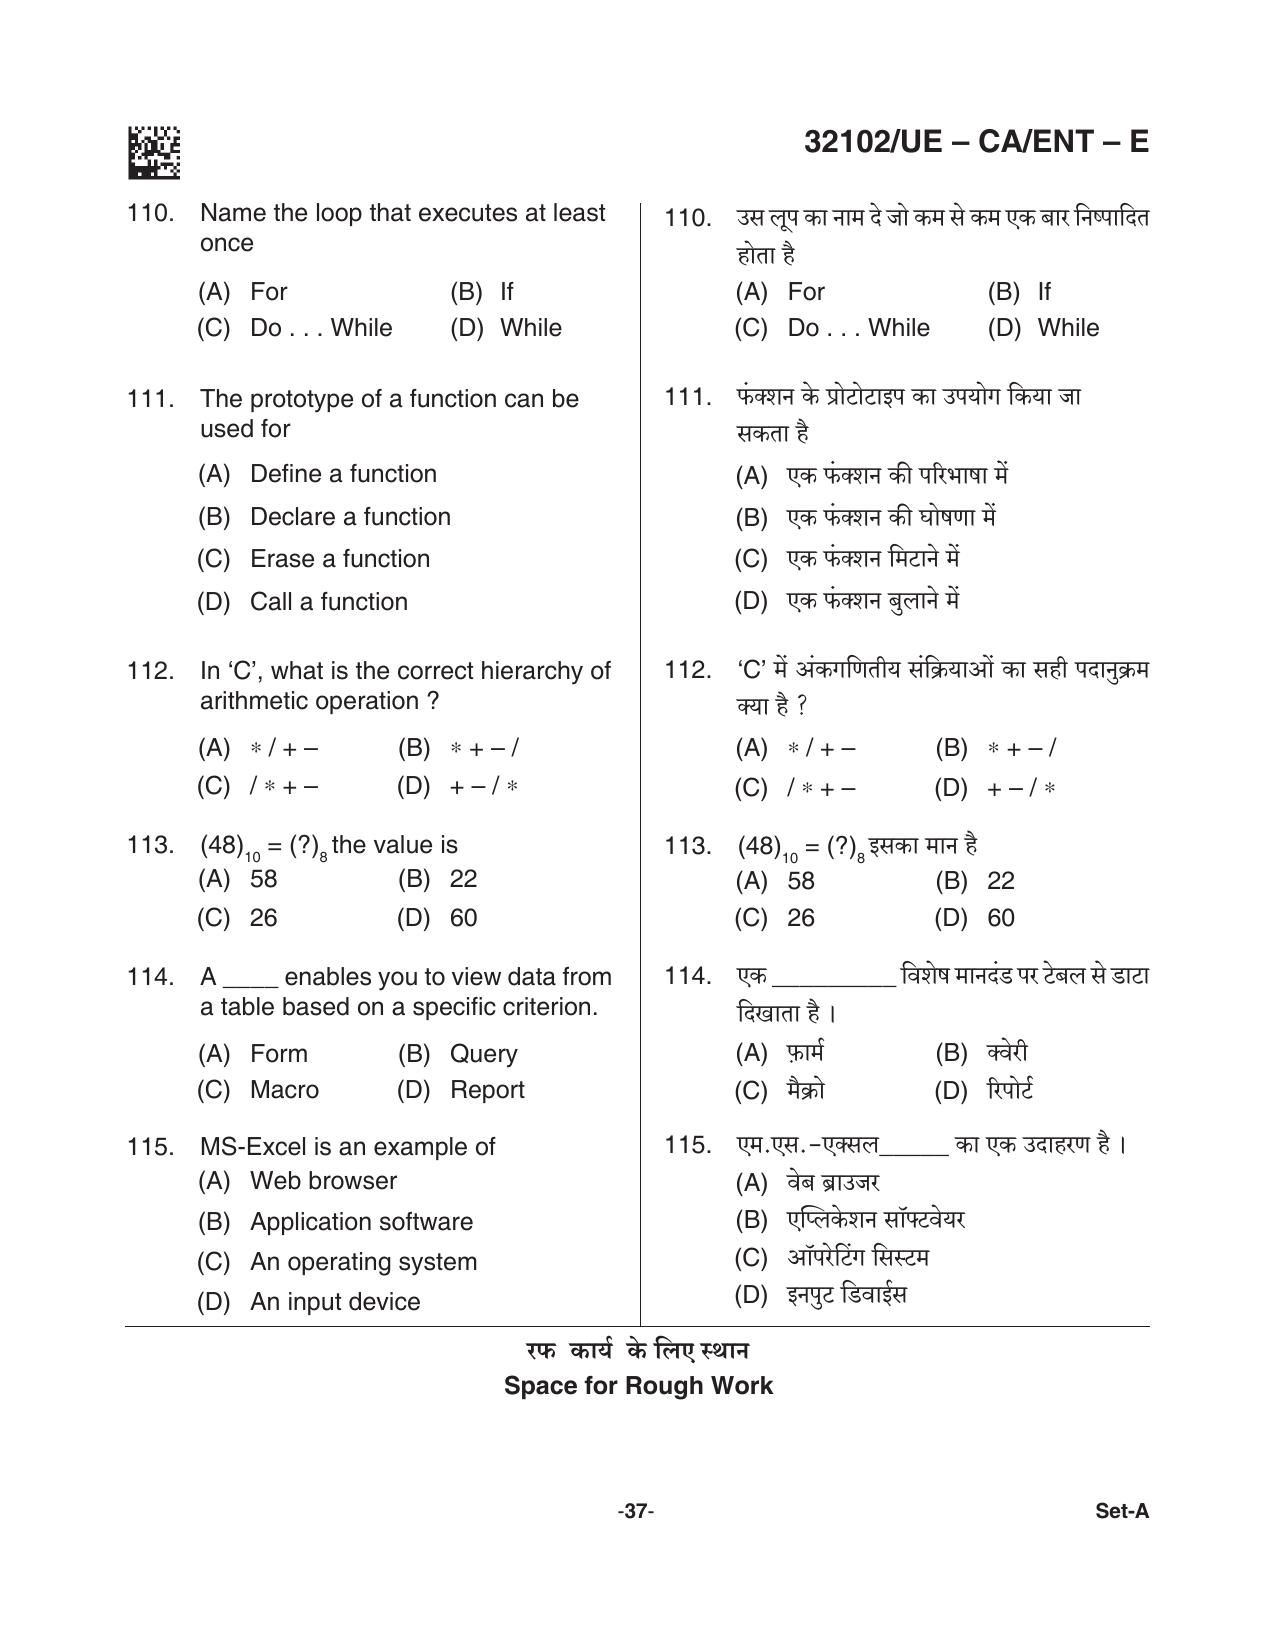 CG Pre MCA 2021 Question Paper - Page 37